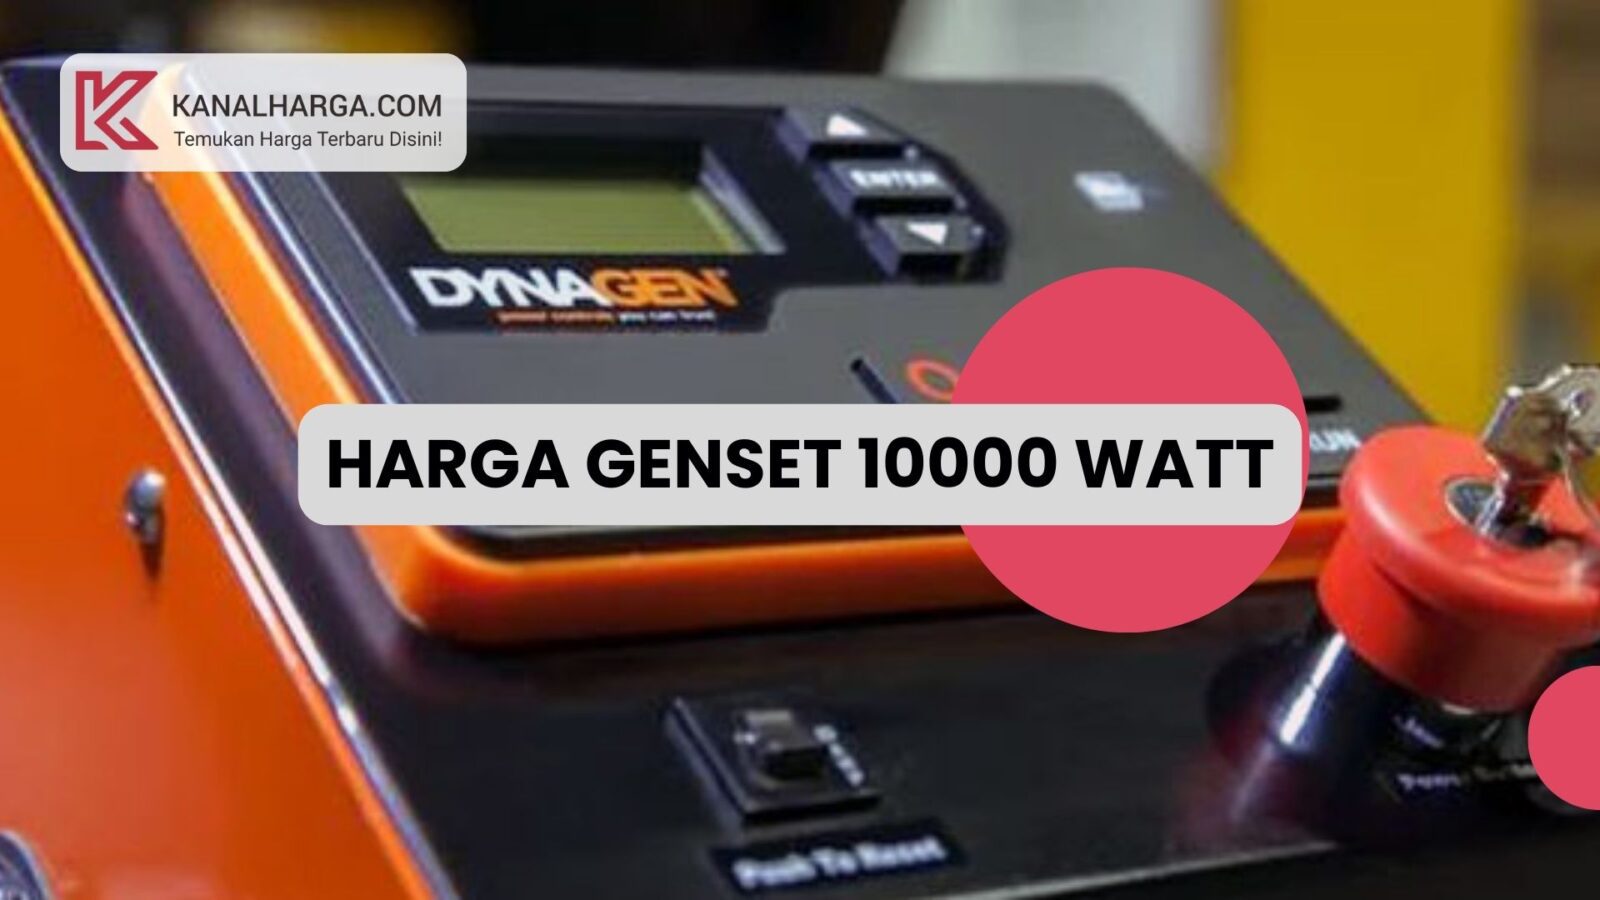 Harga Genset 10000 Watt Harga Genset 10000 Watt (1 Phase, 3 Phase, Silent)